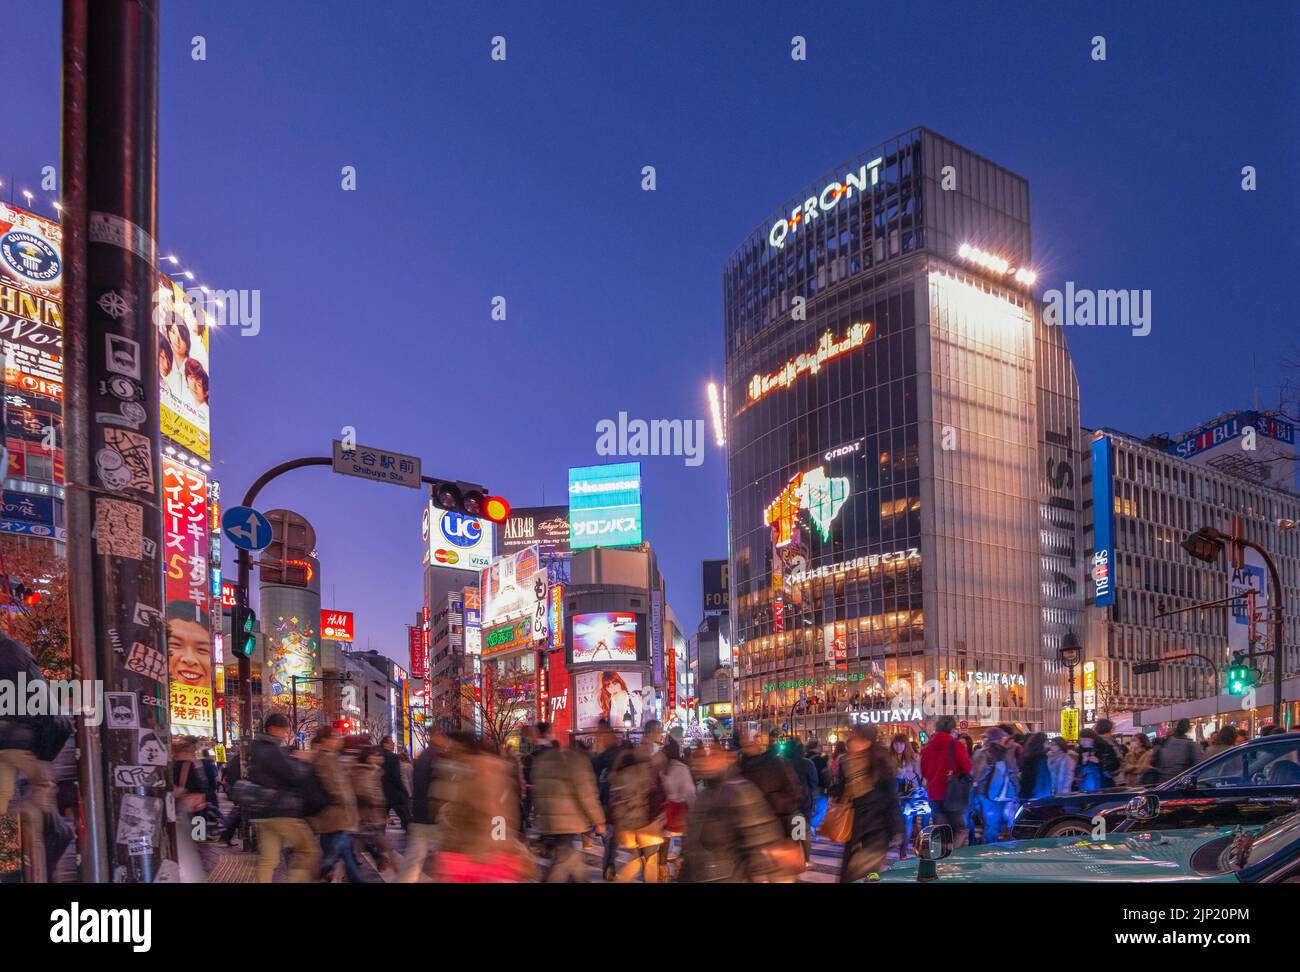 DECEMBER 24, 2012 - TOKYO, JAPAN: Pedestrians cross Shibuya Crossing, one of the busiest crosswalks in the world. Stock Photo